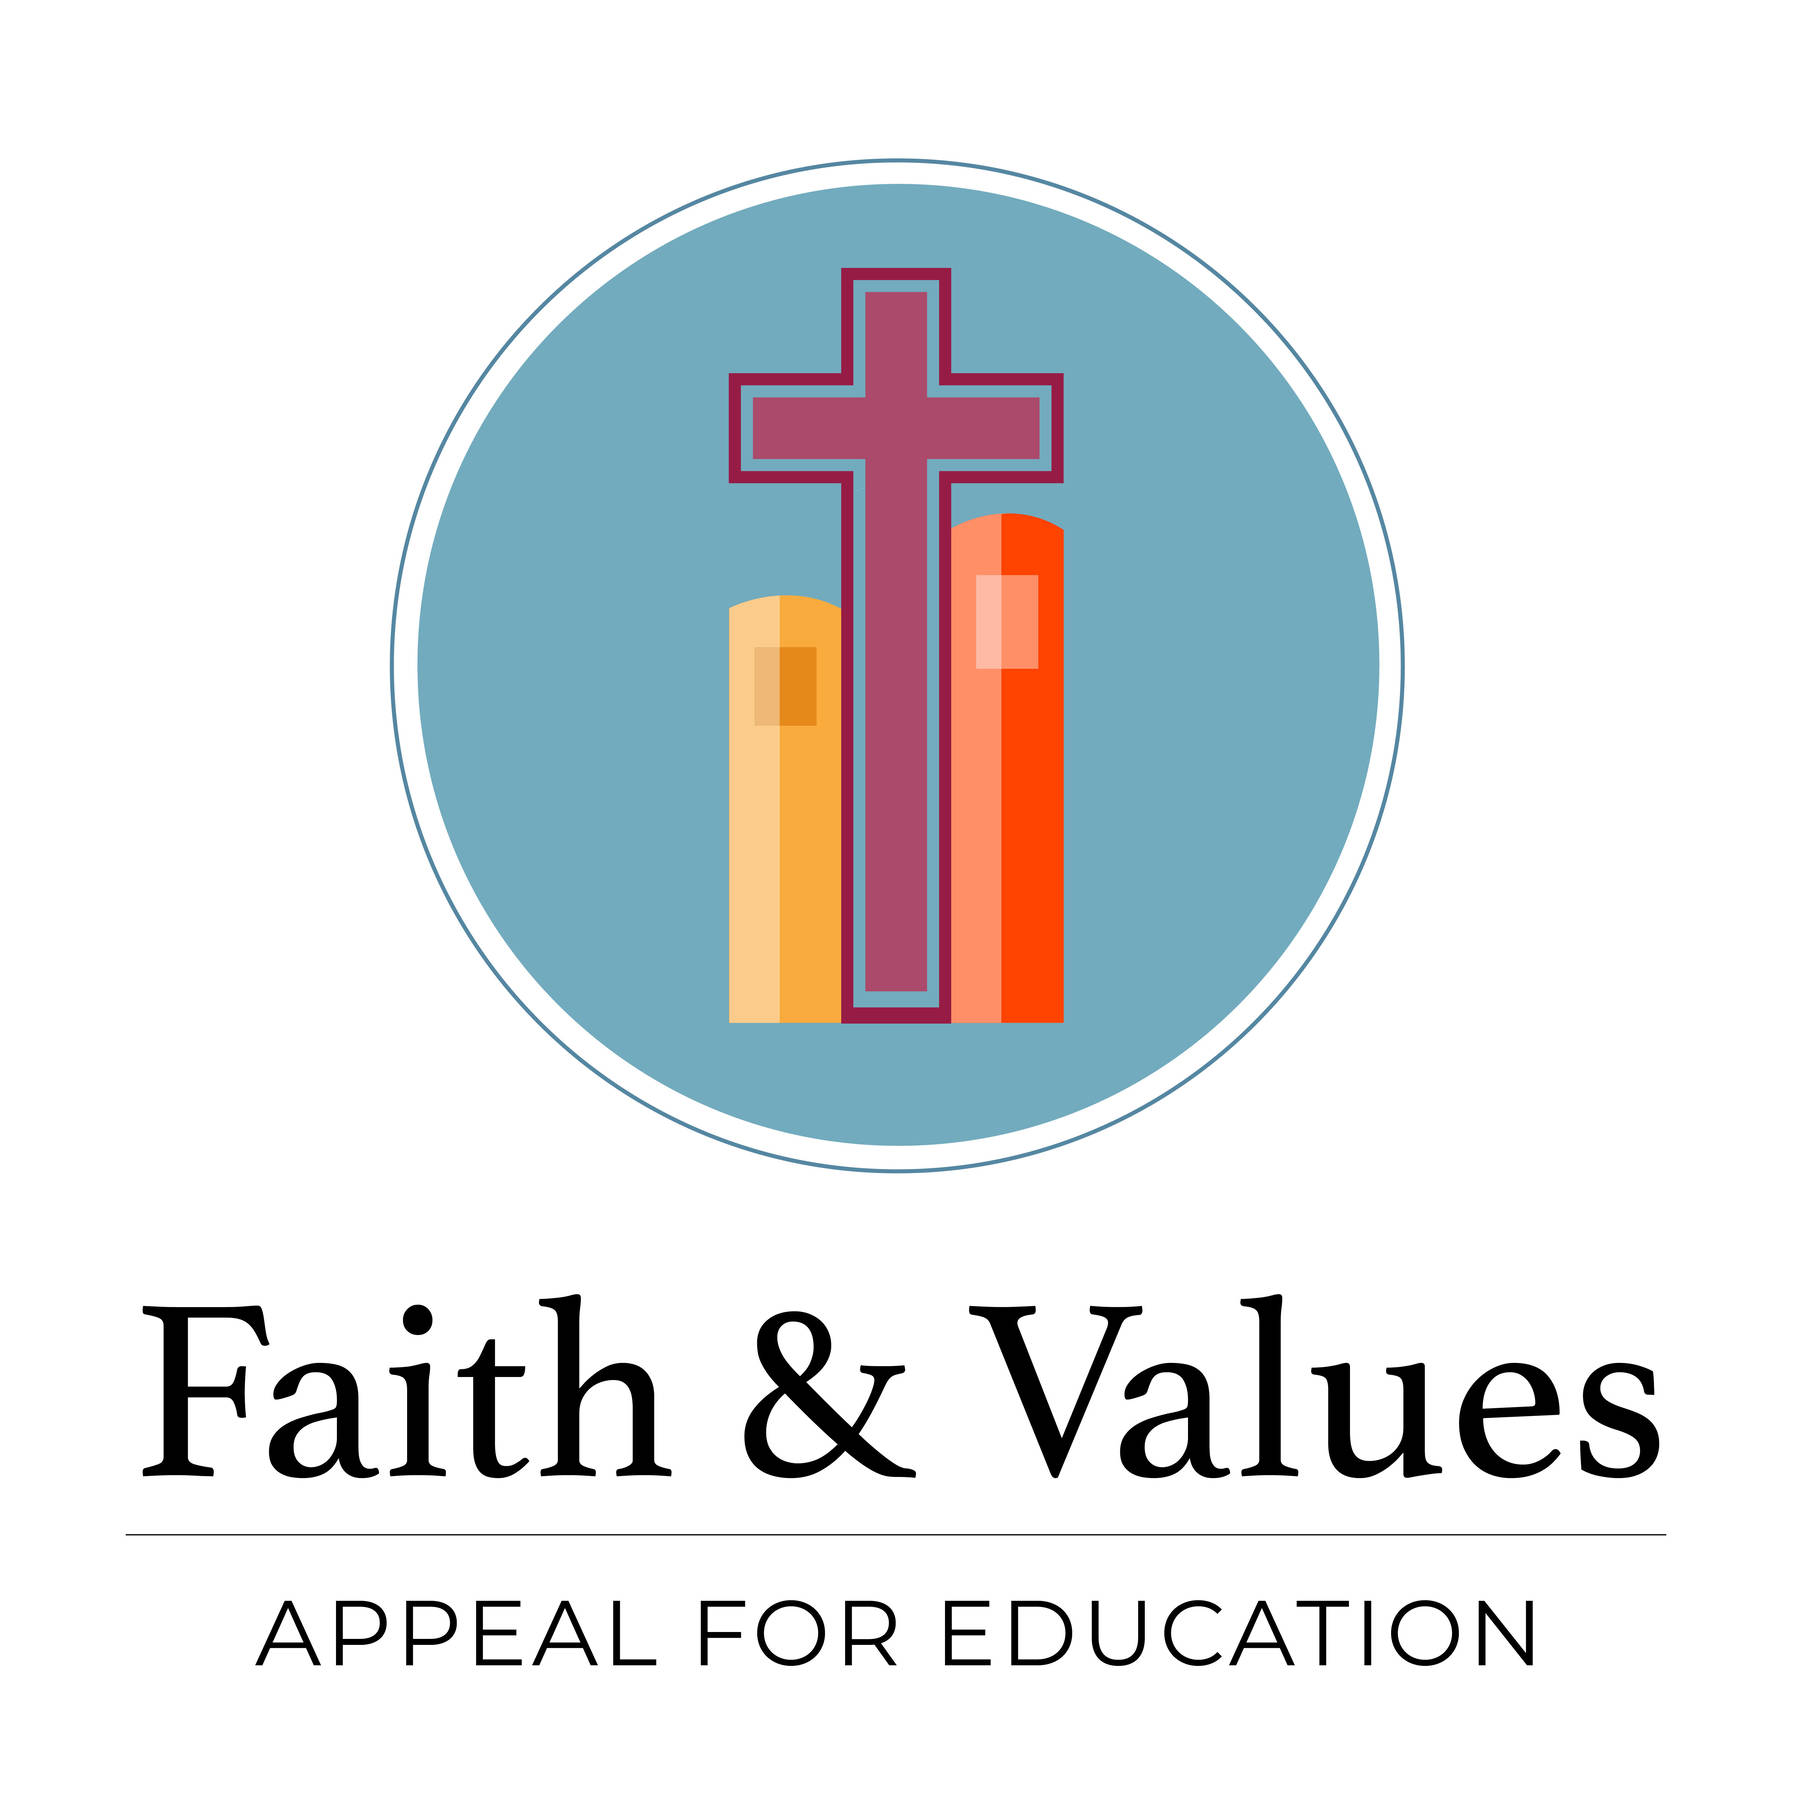 Faith + Values Appeal for Catholic Education